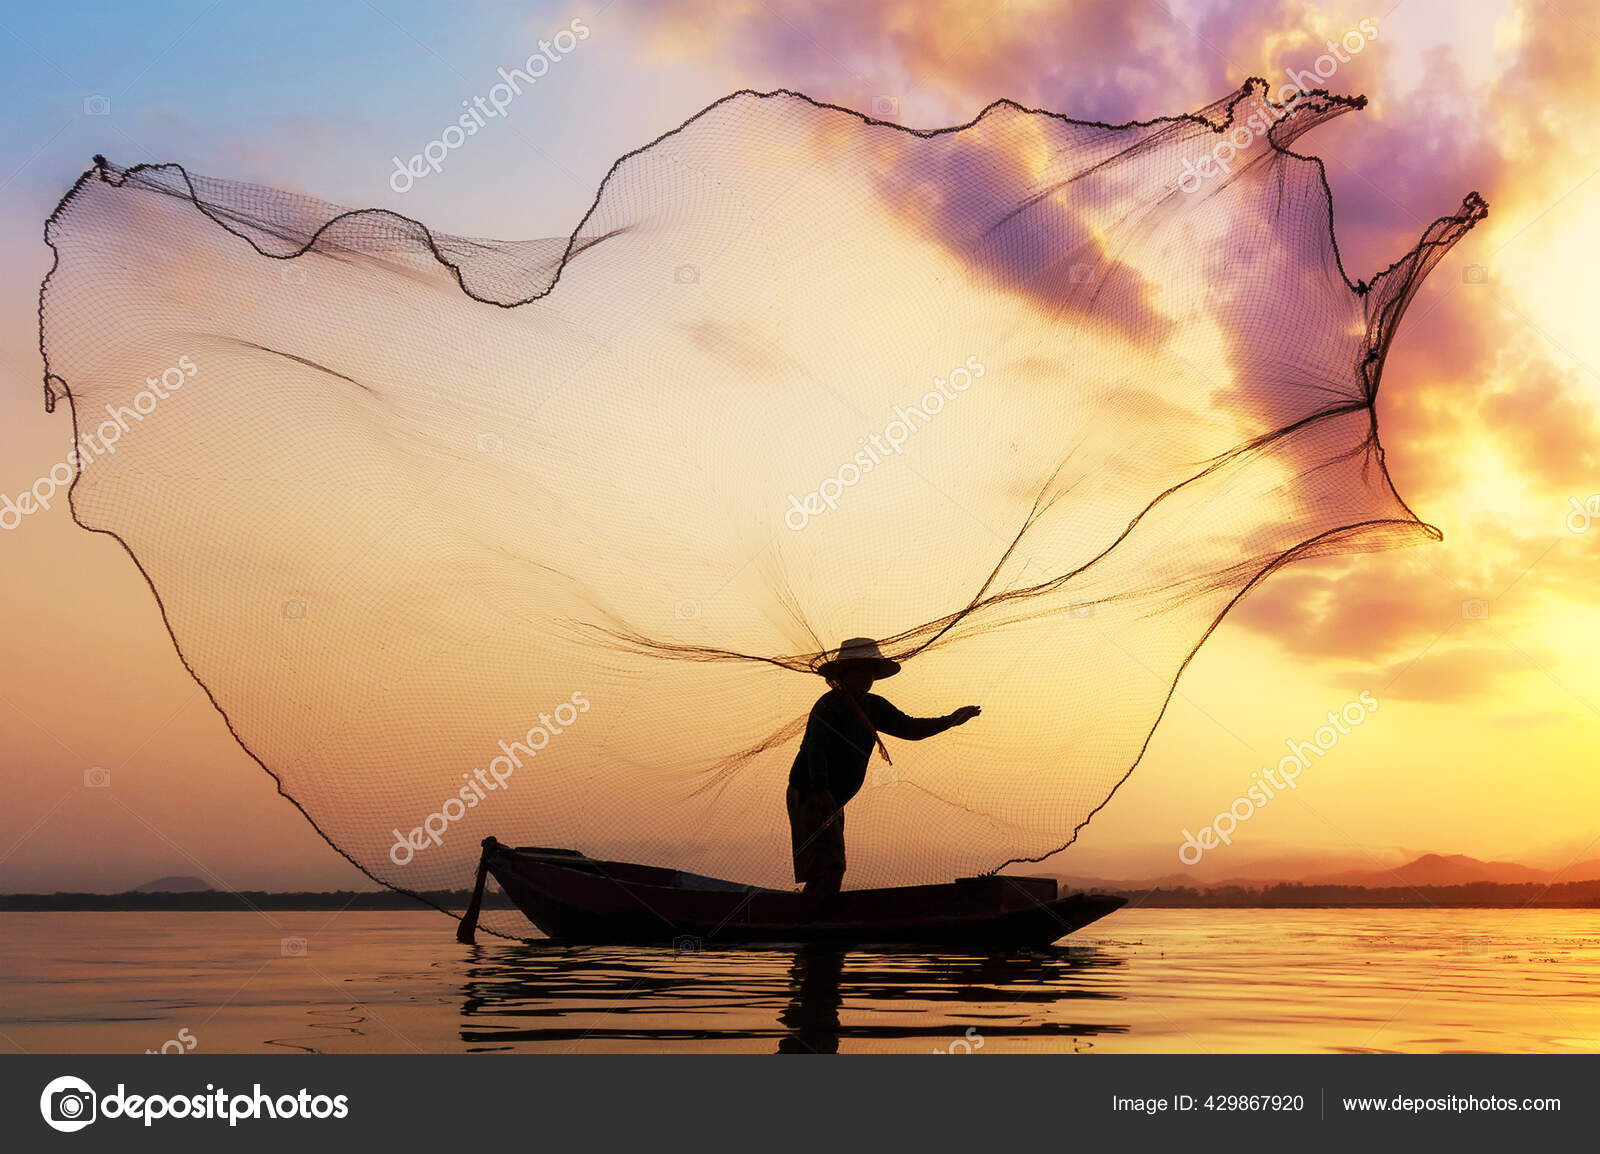 https://st2.depositphotos.com/42858700/42986/i/1600/depositphotos_429867920-stock-photo-fisherman-throwing-out-fishing-net.jpg